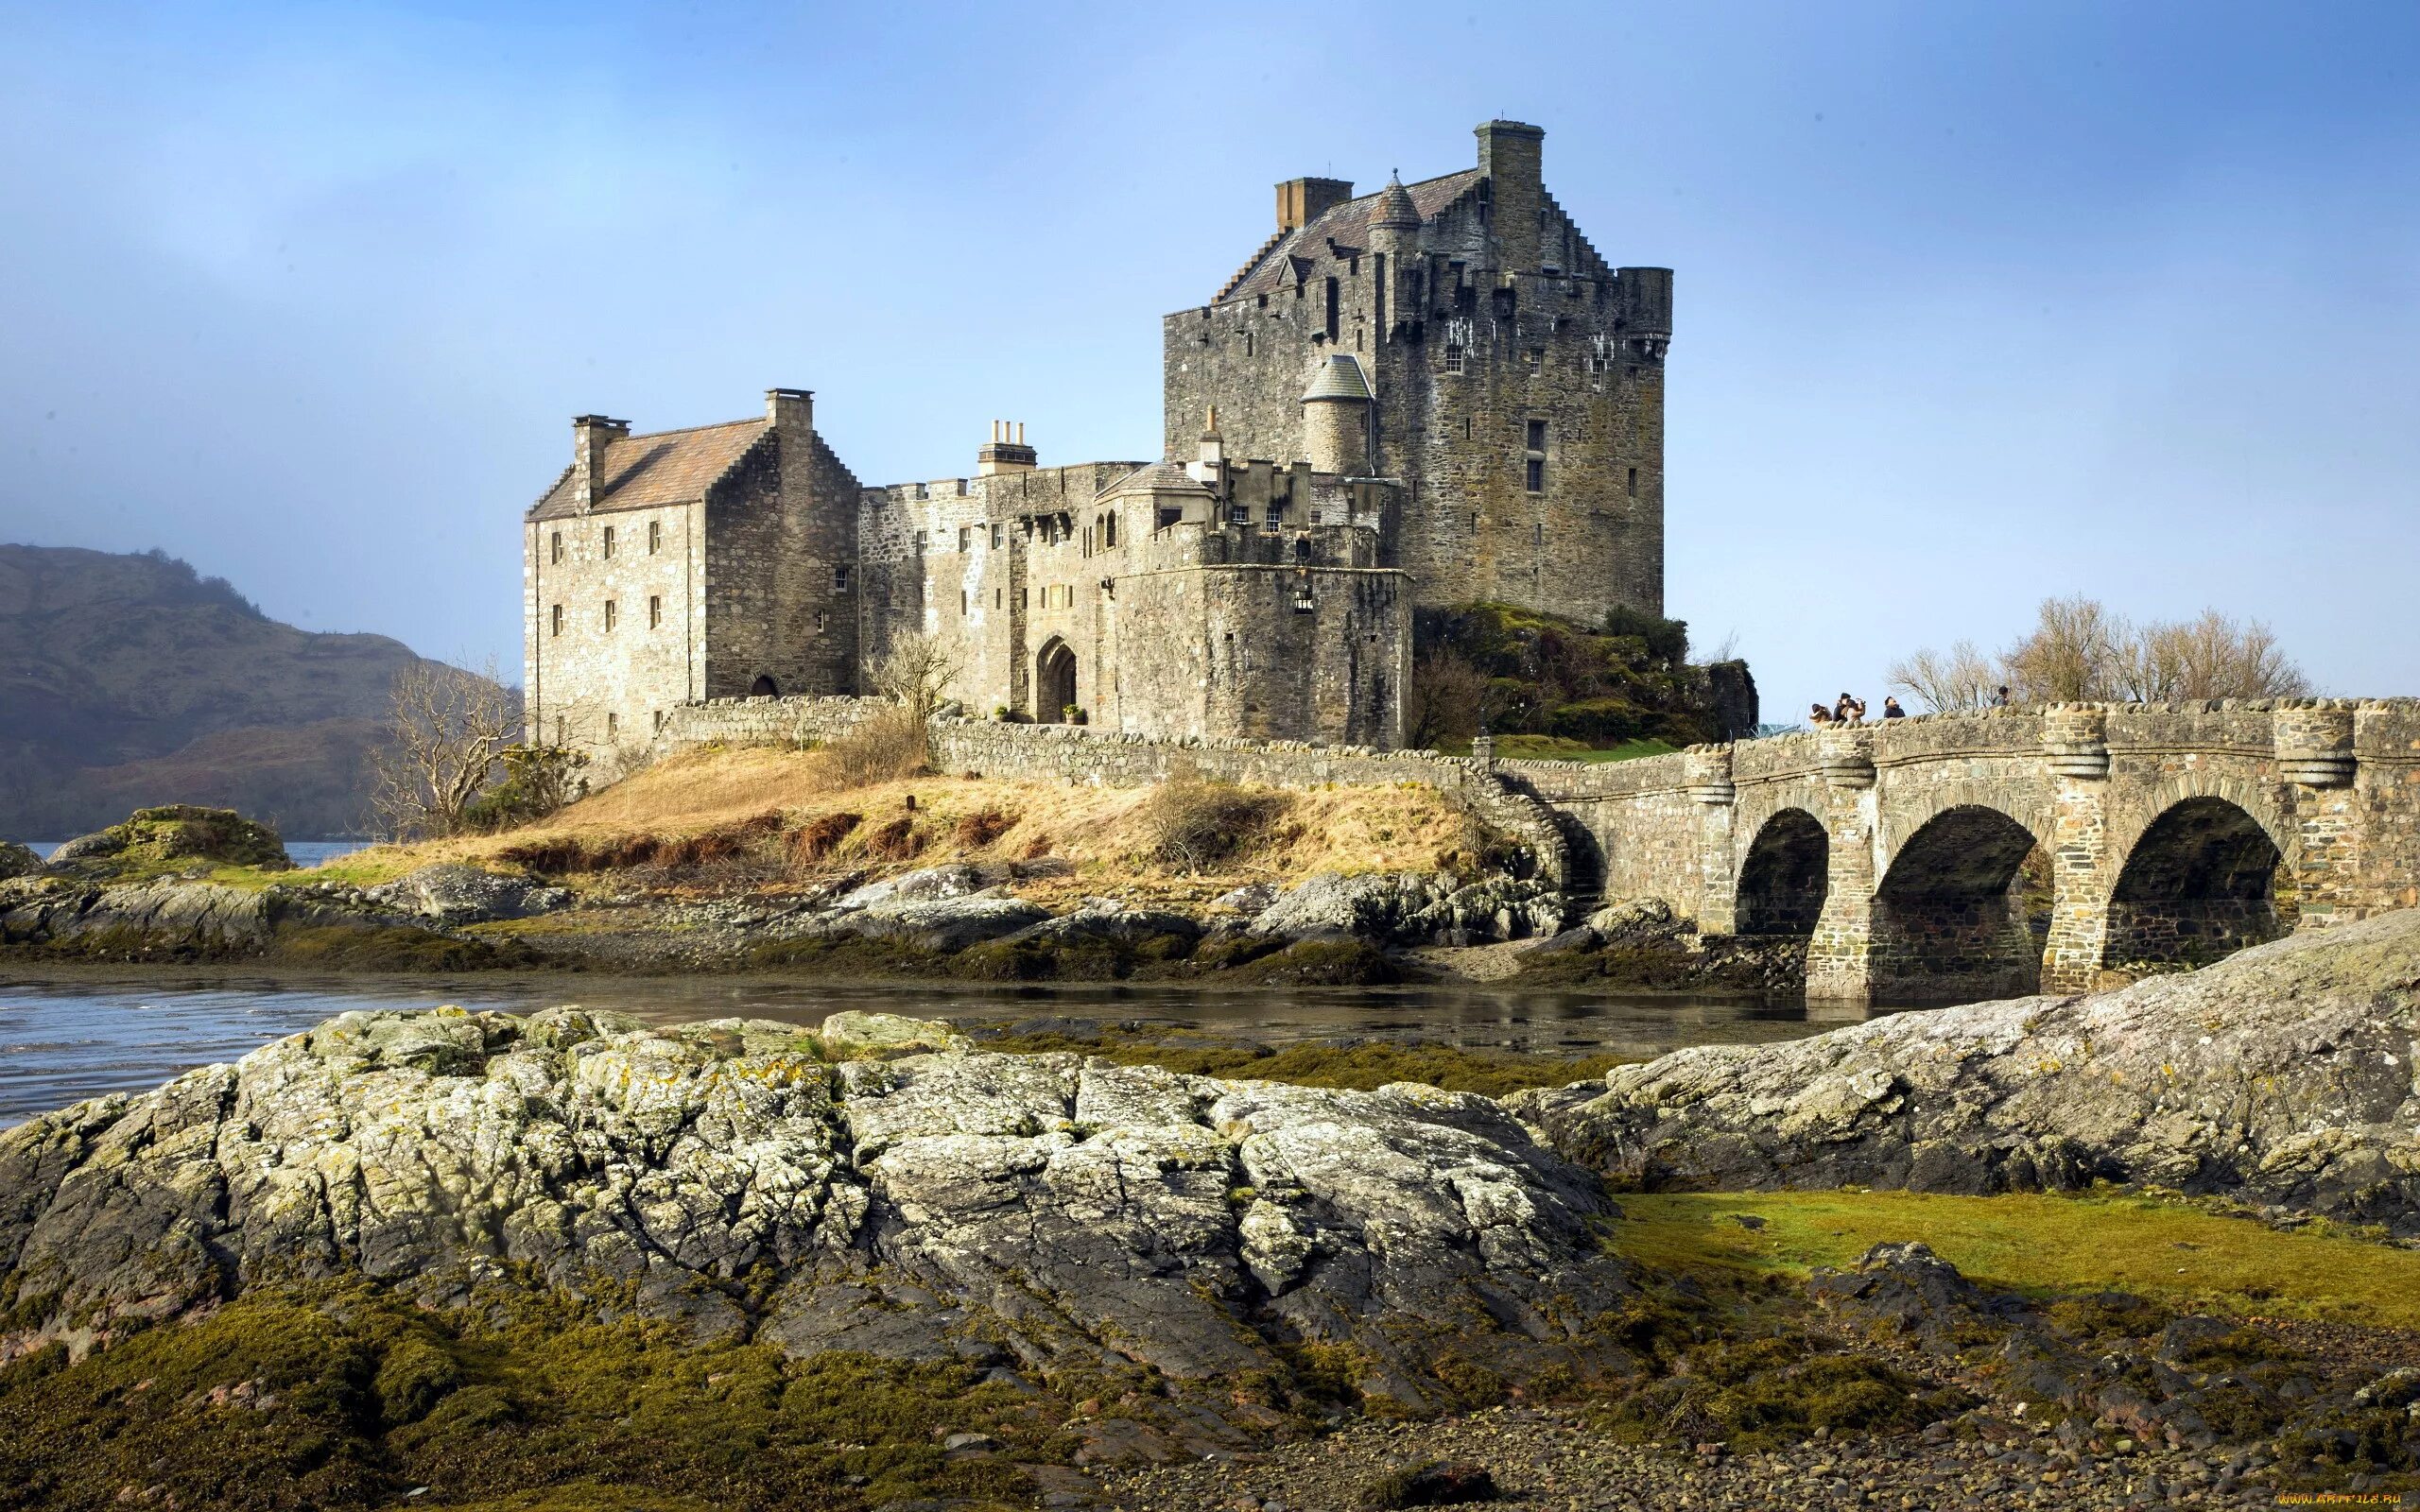 Village крепость. Эйлен Донан Шотландия. Замок Эйлен-Донан, Великобритания. Шотландский замок Эйлен Донан. Замок Эйлен-Донан, Шотландия Западная Европа.